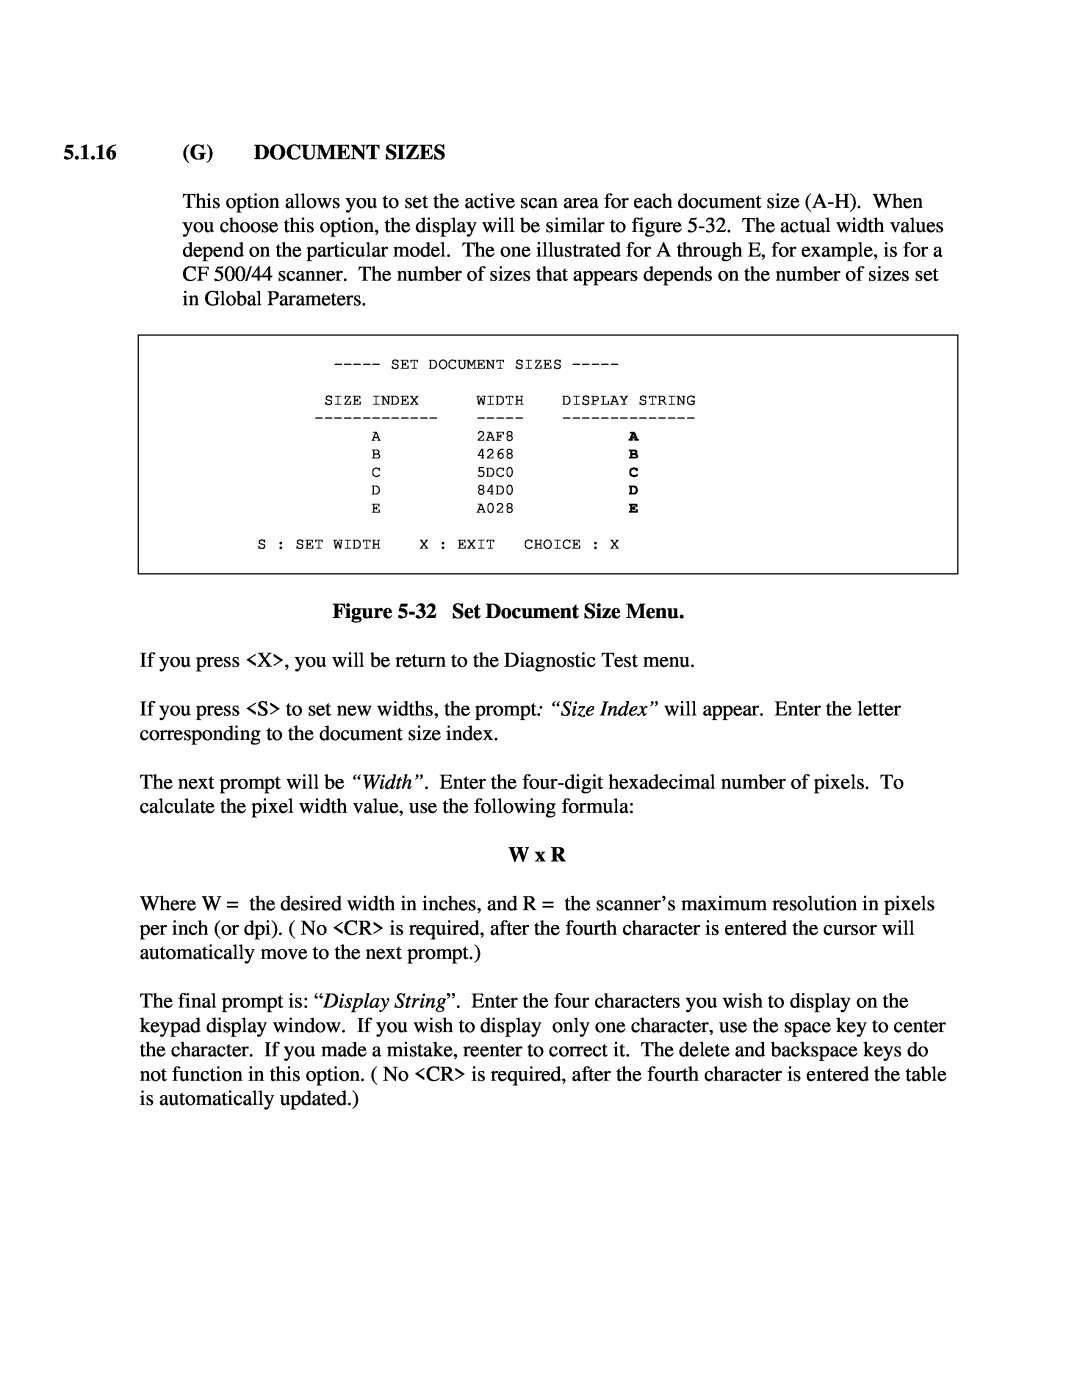 IBM CF Series manual G Document Sizes, 32 Set Document Size Menu, W x R 